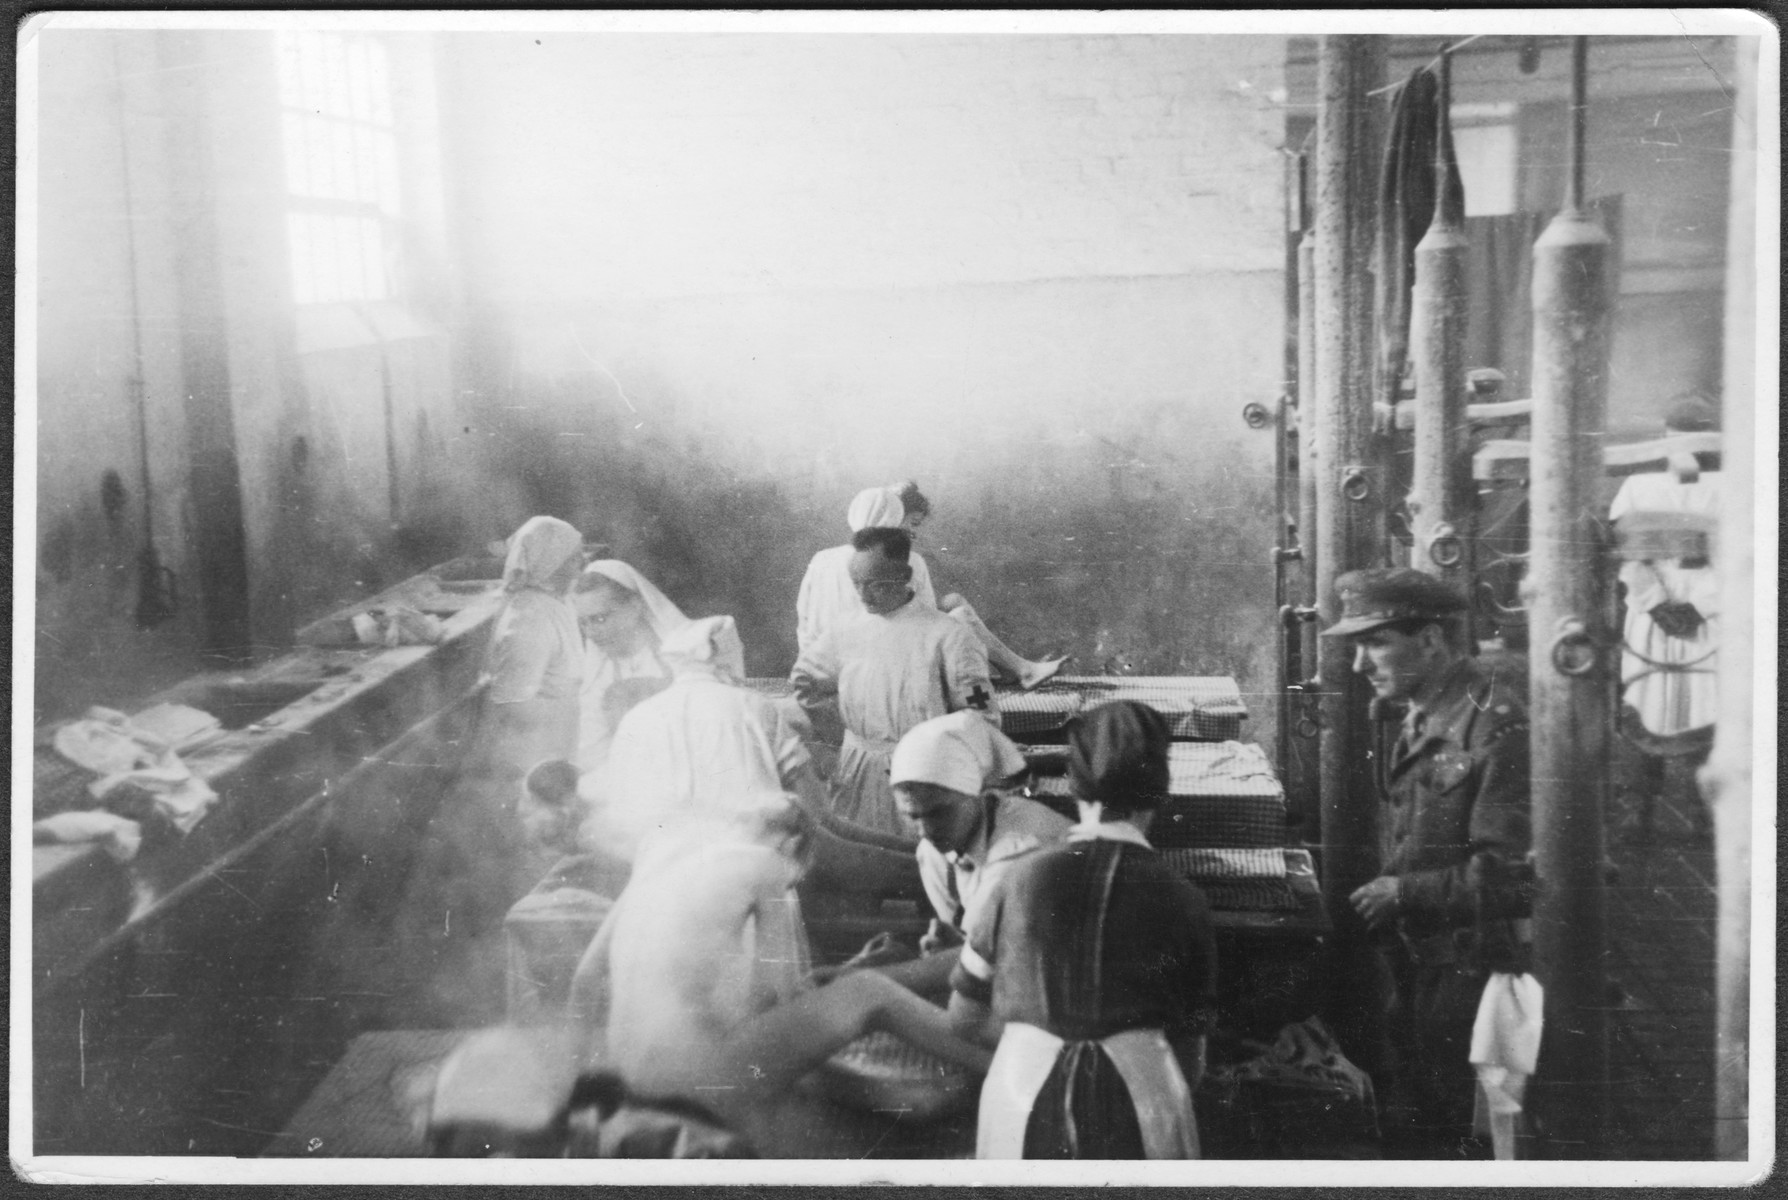 British medical personnel wash and disinfect survivors in Bergen-Belsen.